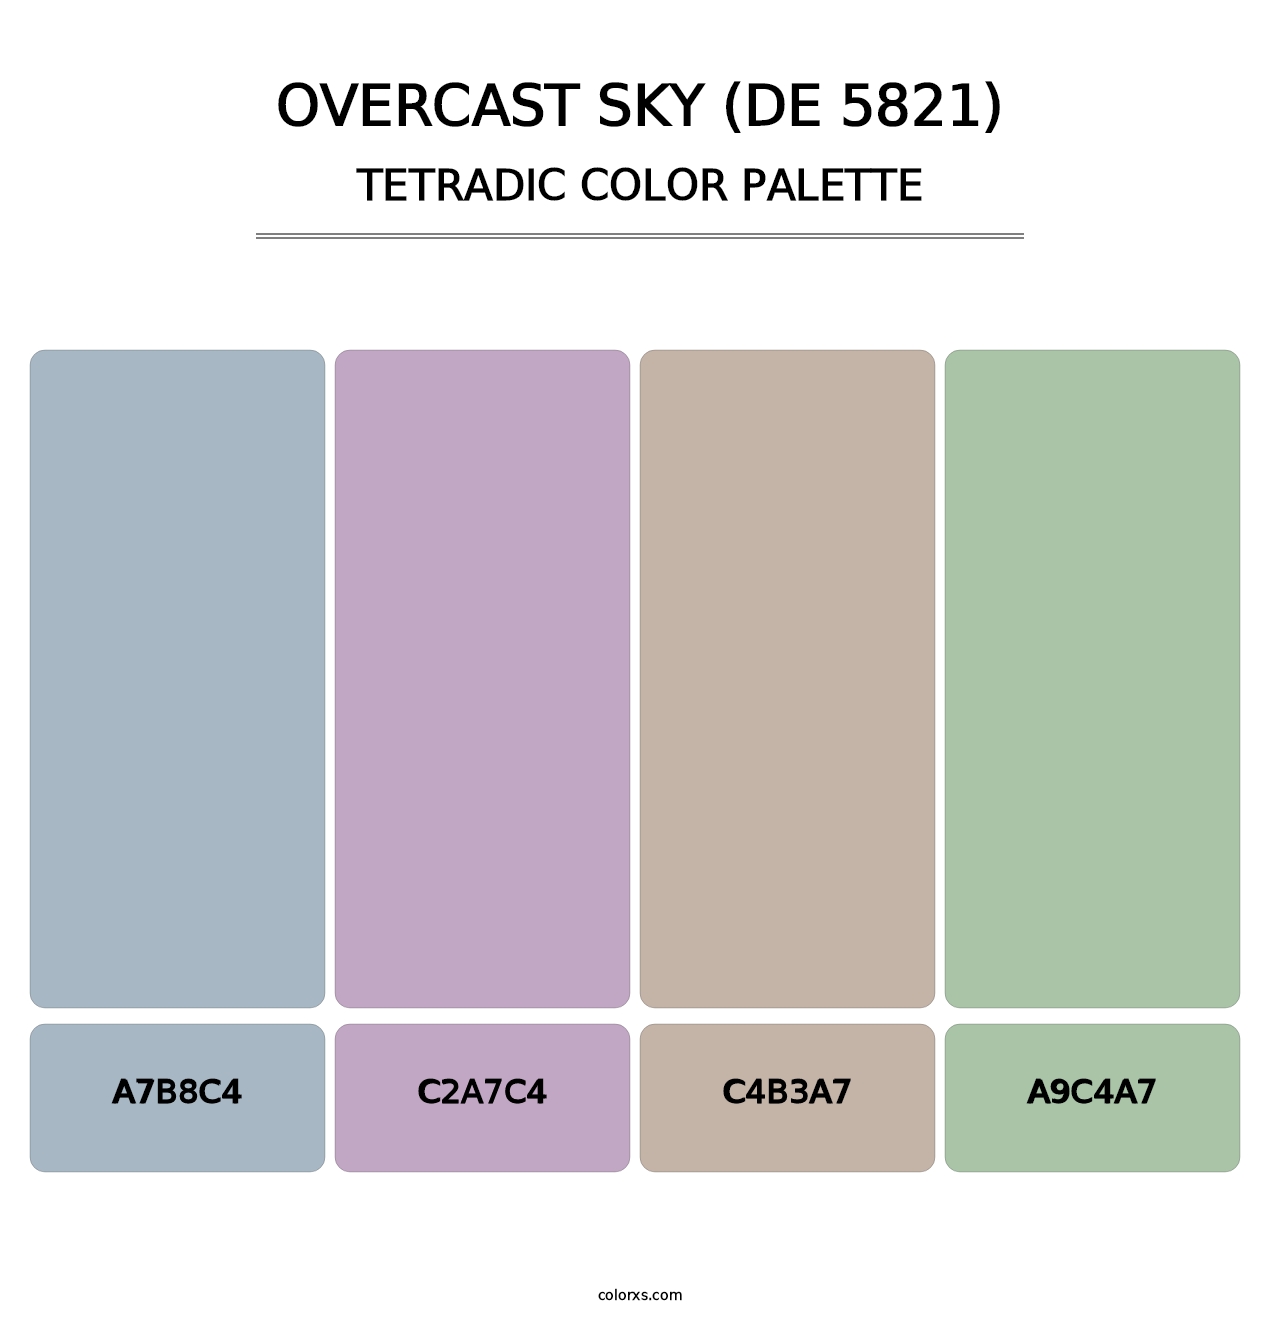 Overcast Sky (DE 5821) - Tetradic Color Palette